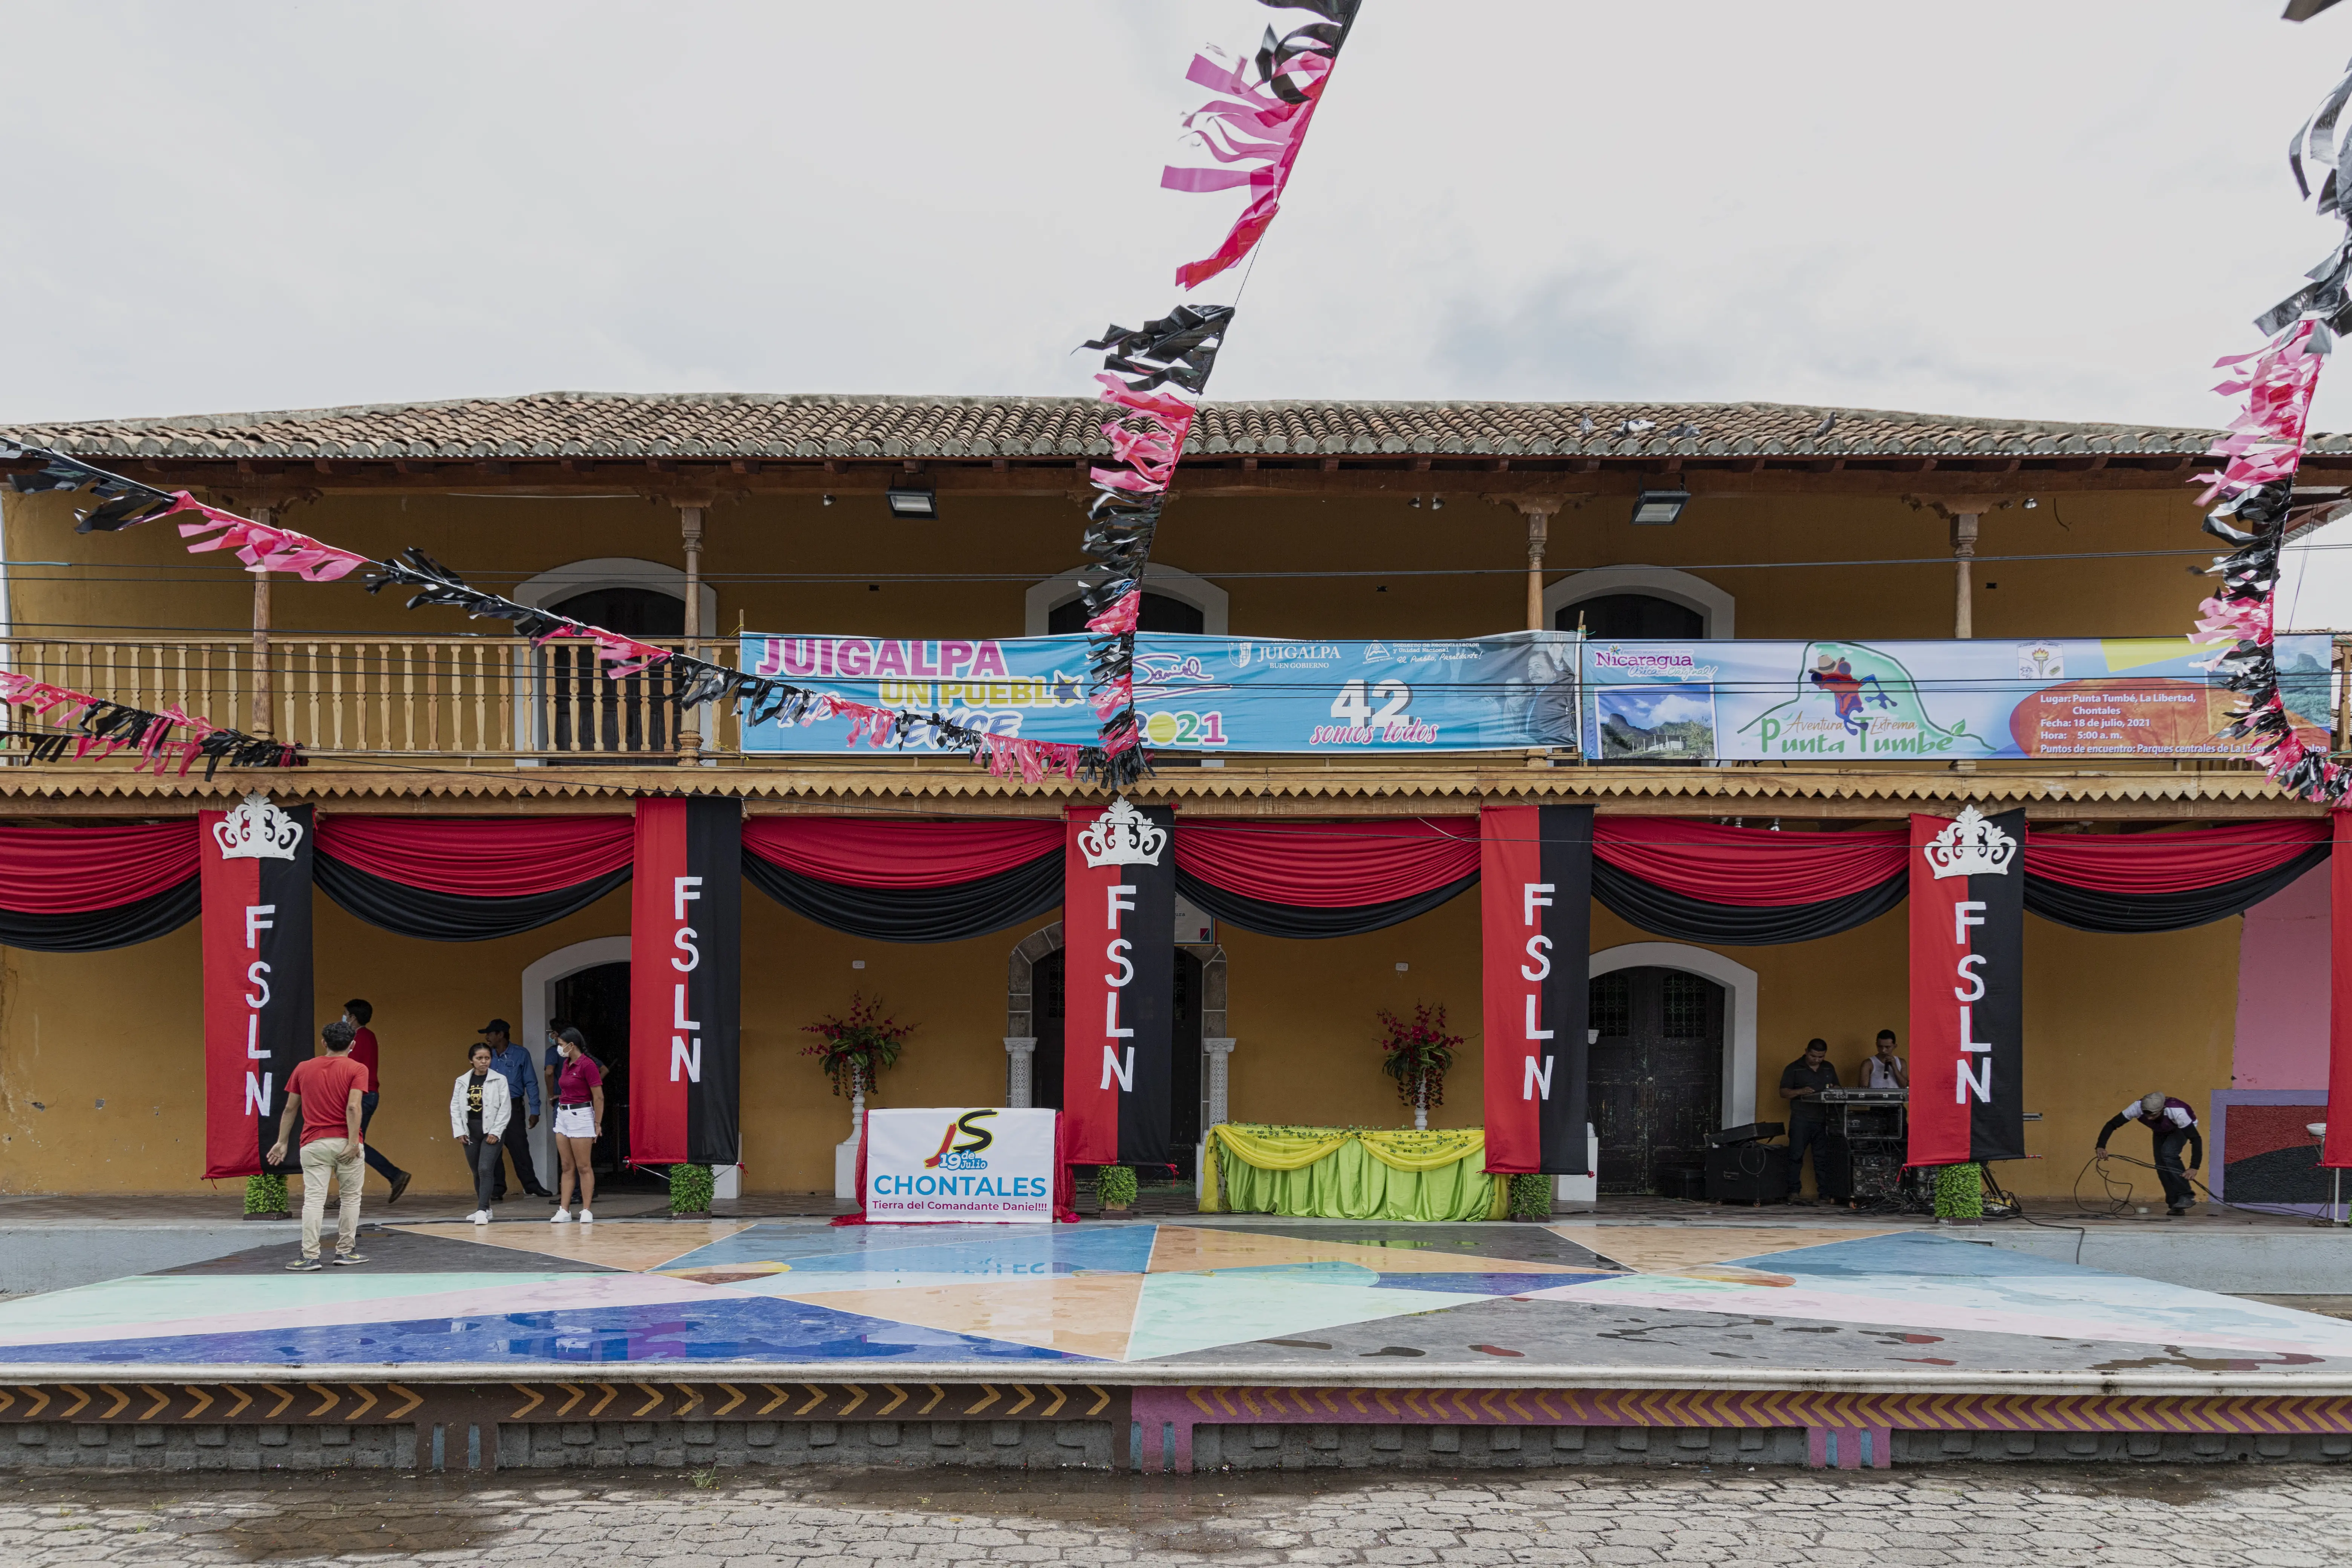 Culture Palace in Juigalpa, Chontales, Nicaragua